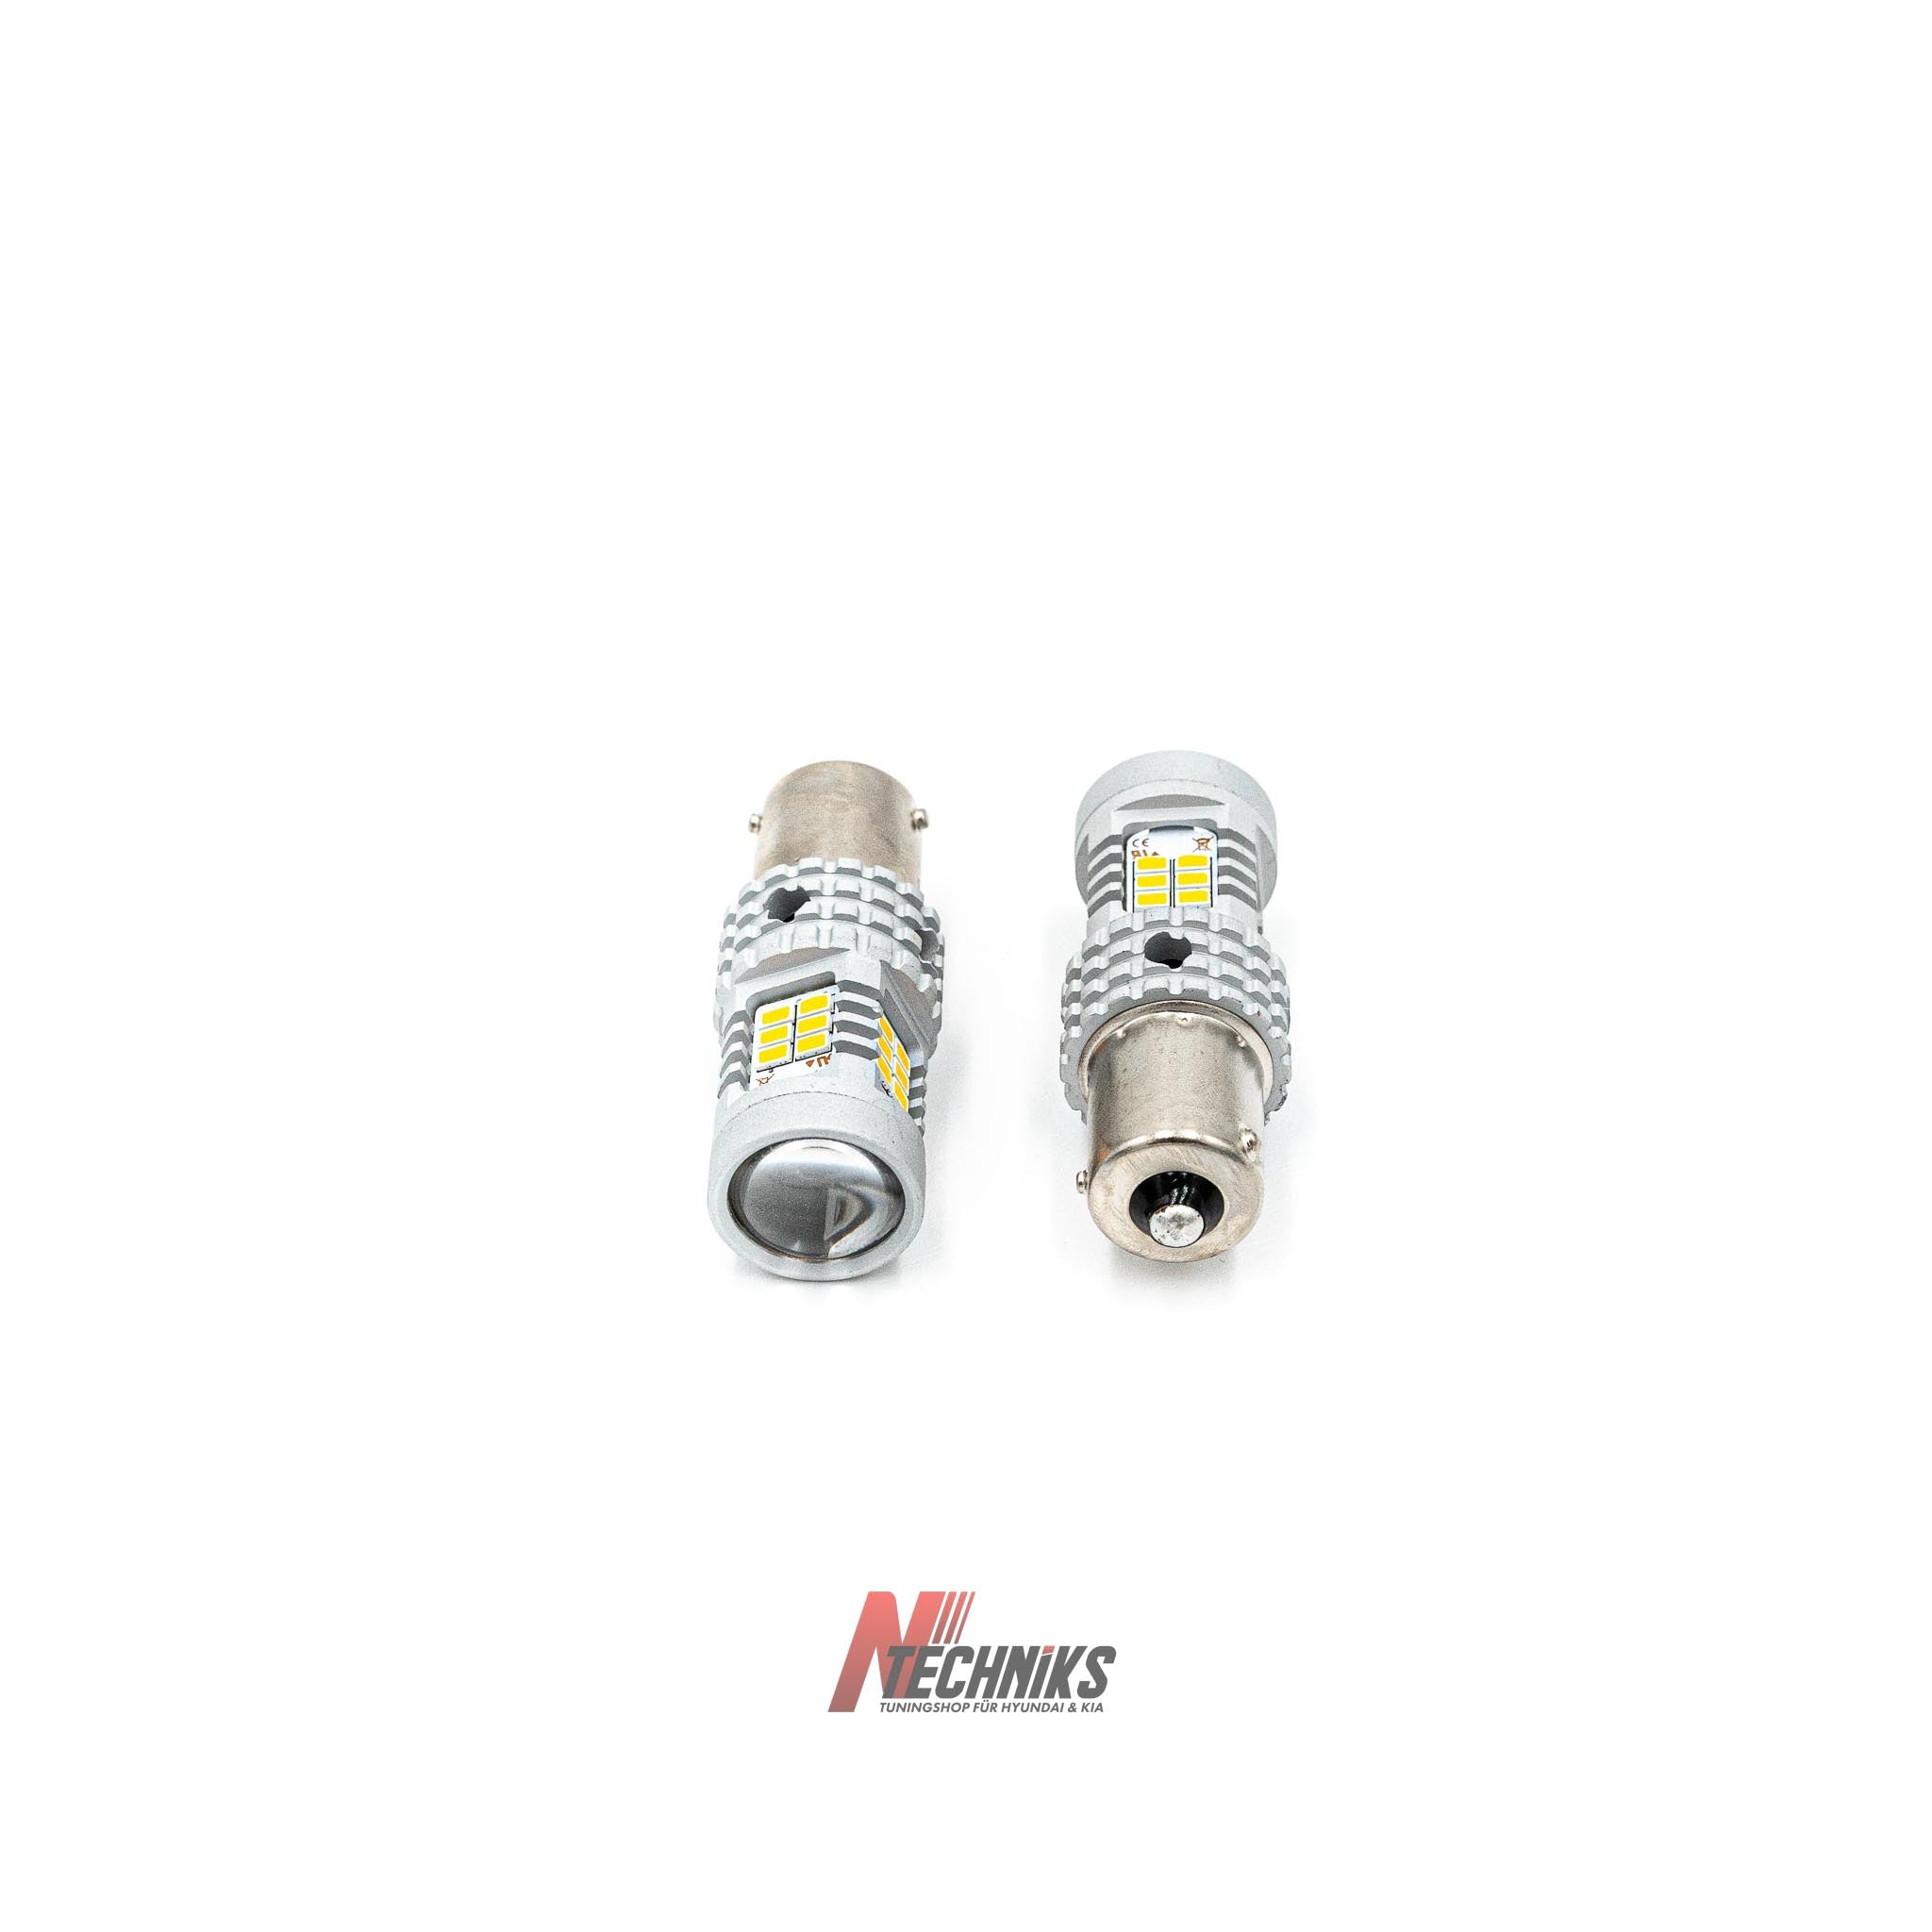 N TECHNIKS® LED Blinker für Hyundai I30N